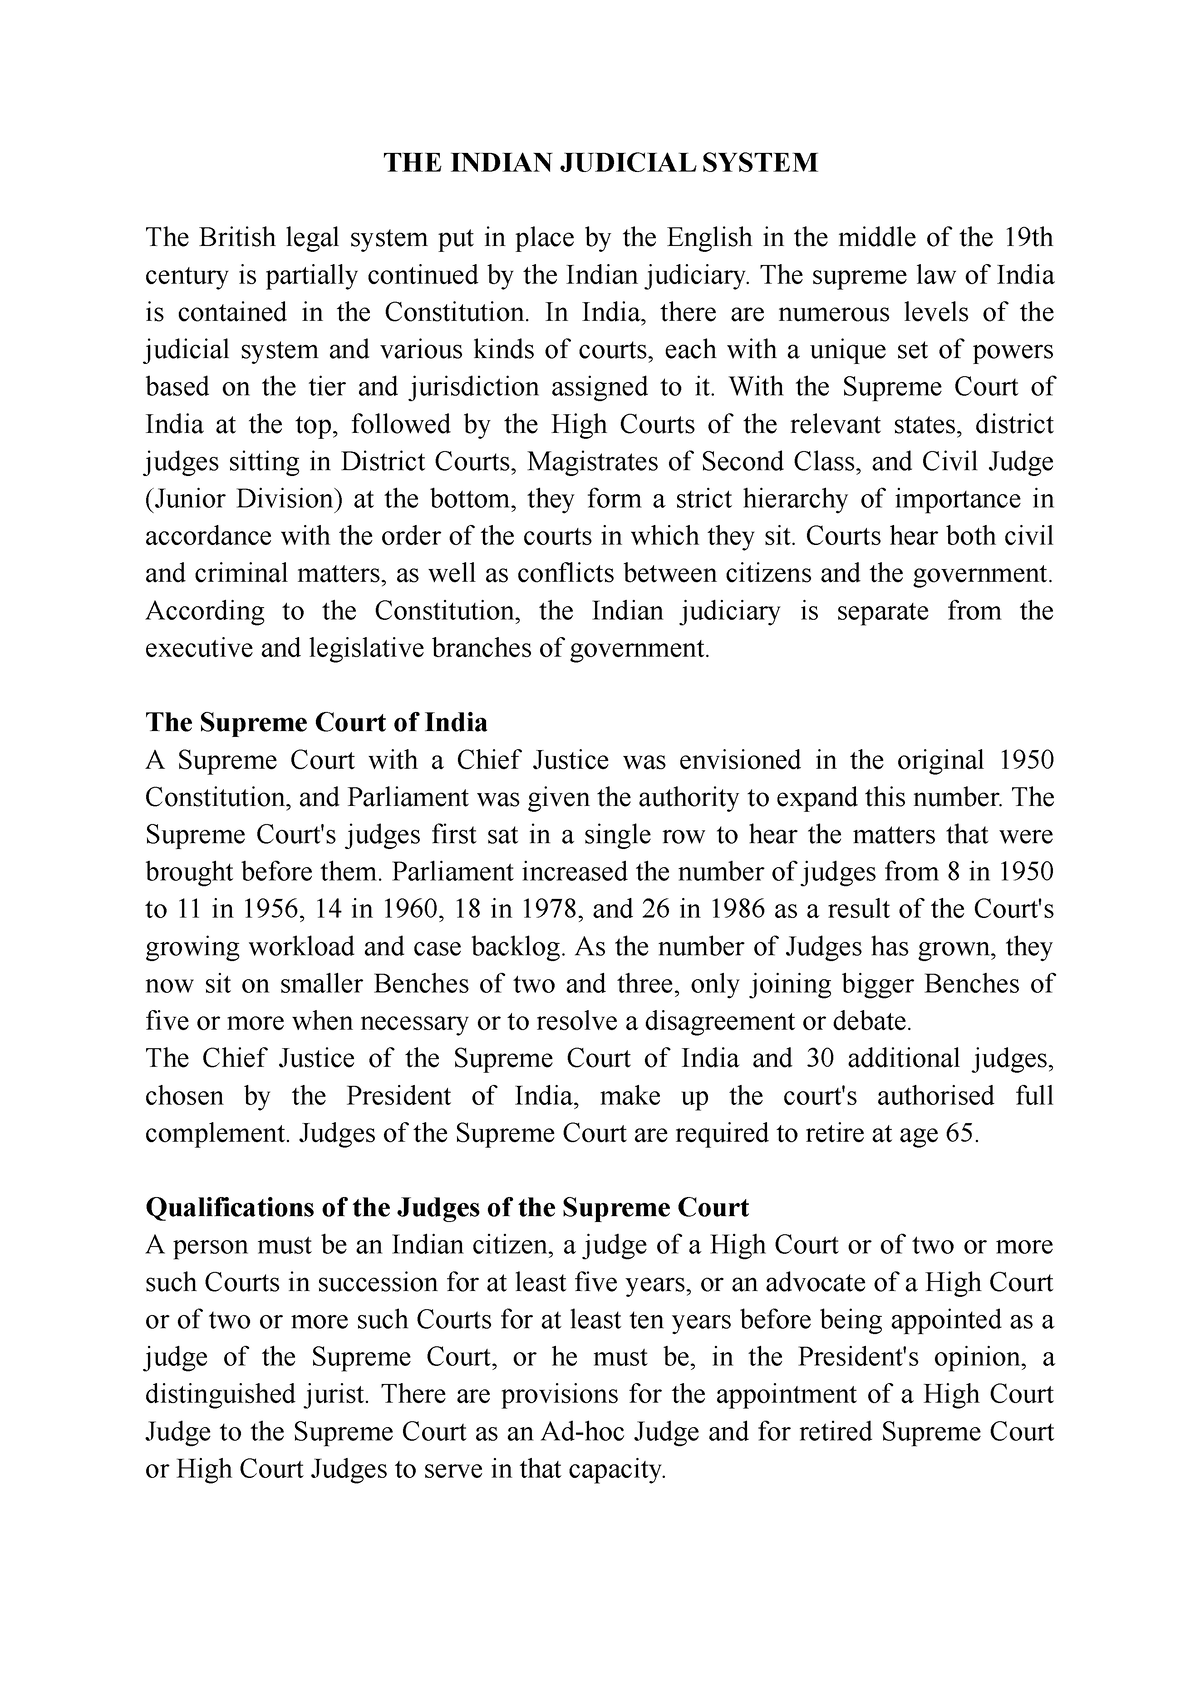 essay on indian judicial system